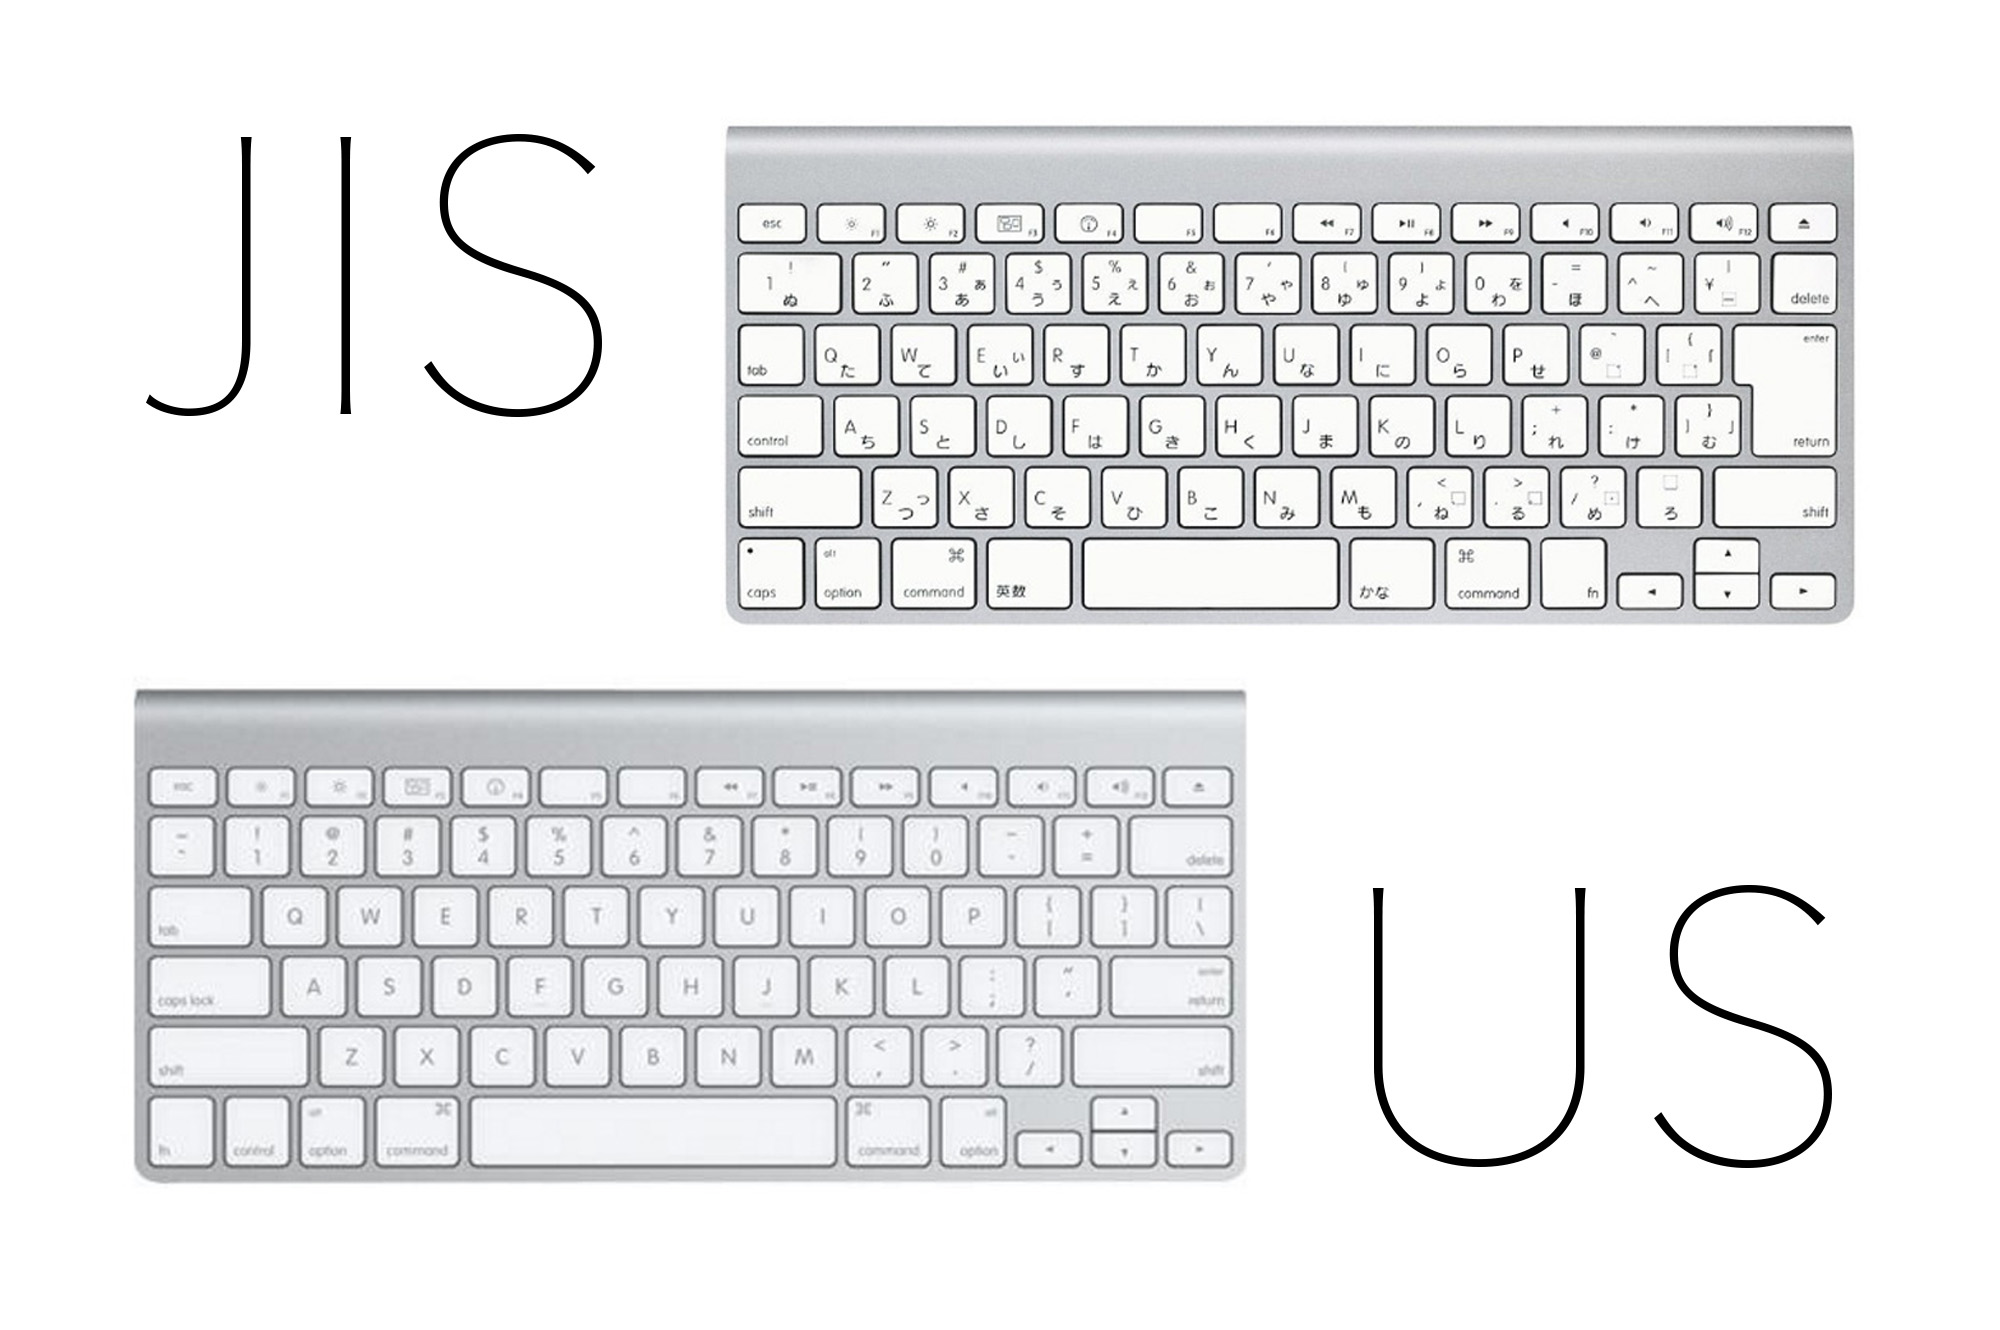 Apple keyboard JIS 配列